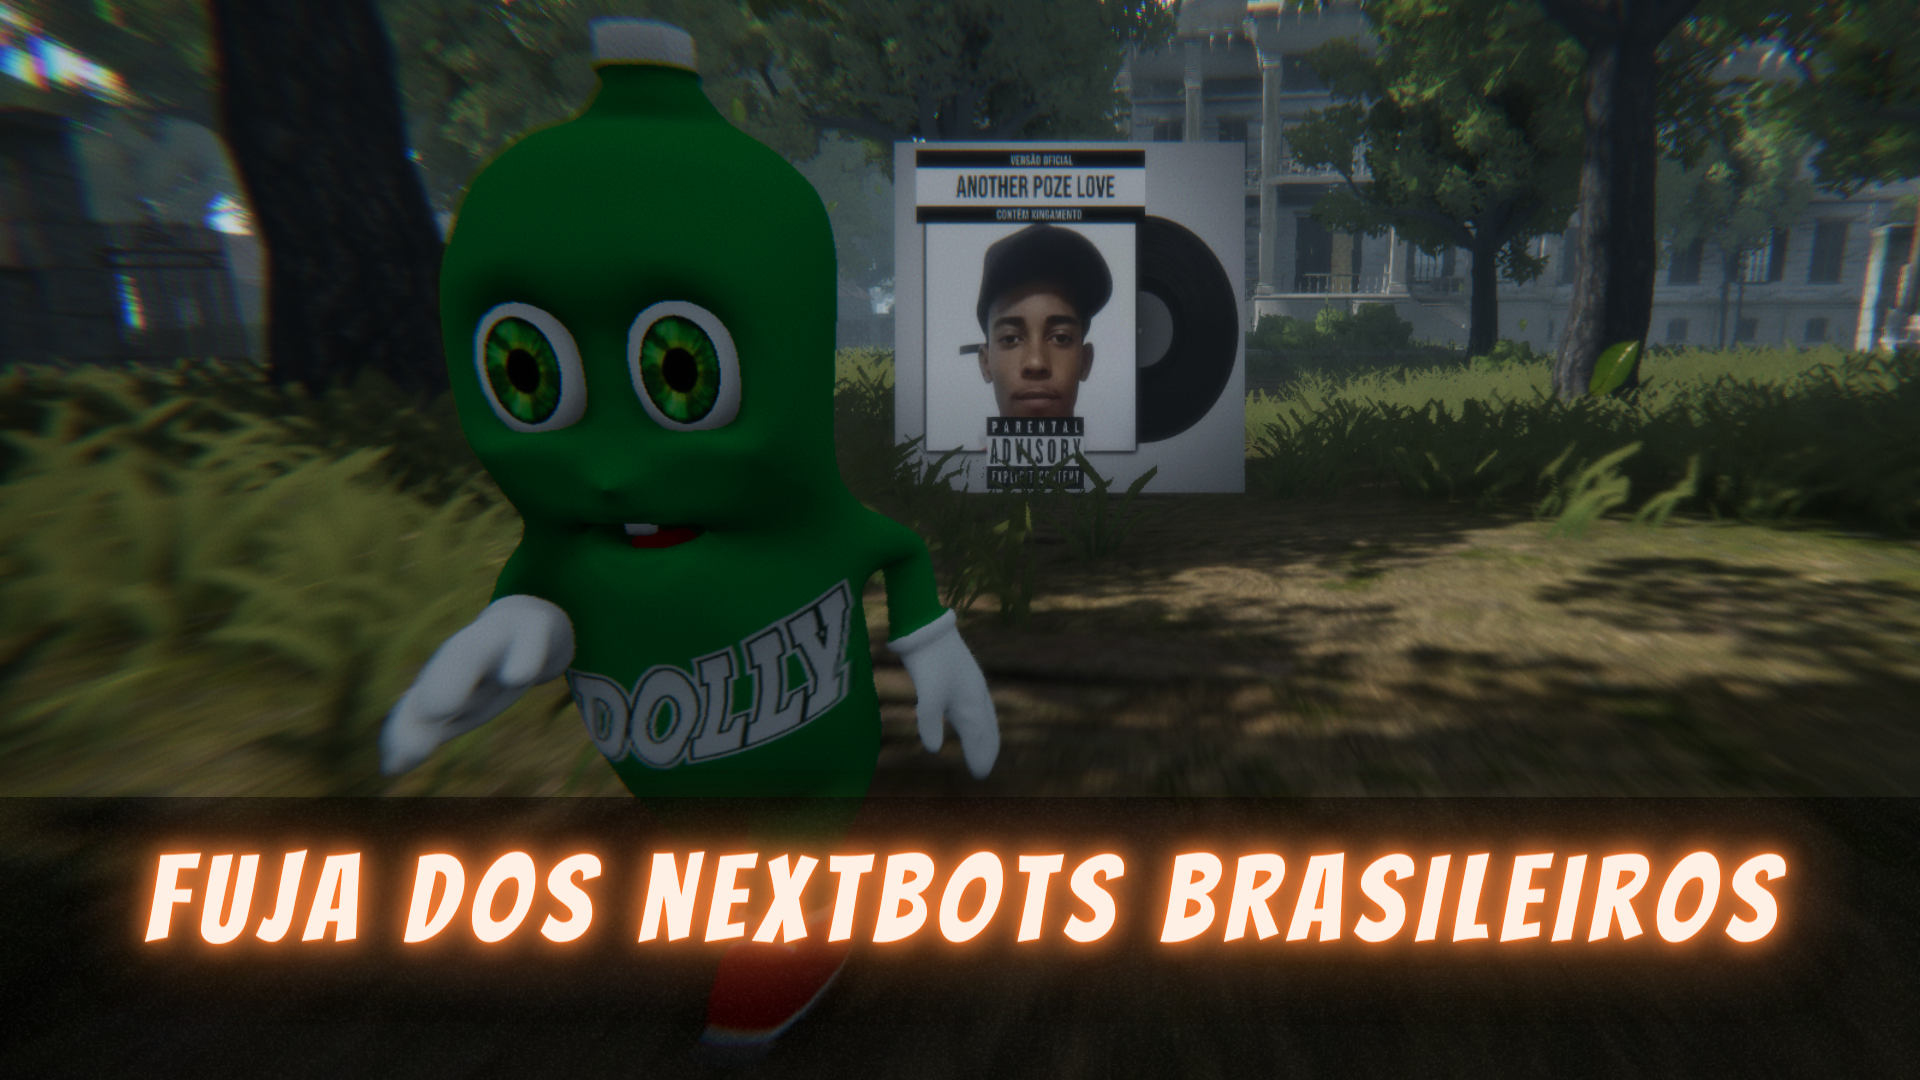 Nextbots Memes BR: OnlineMP para Android - Download